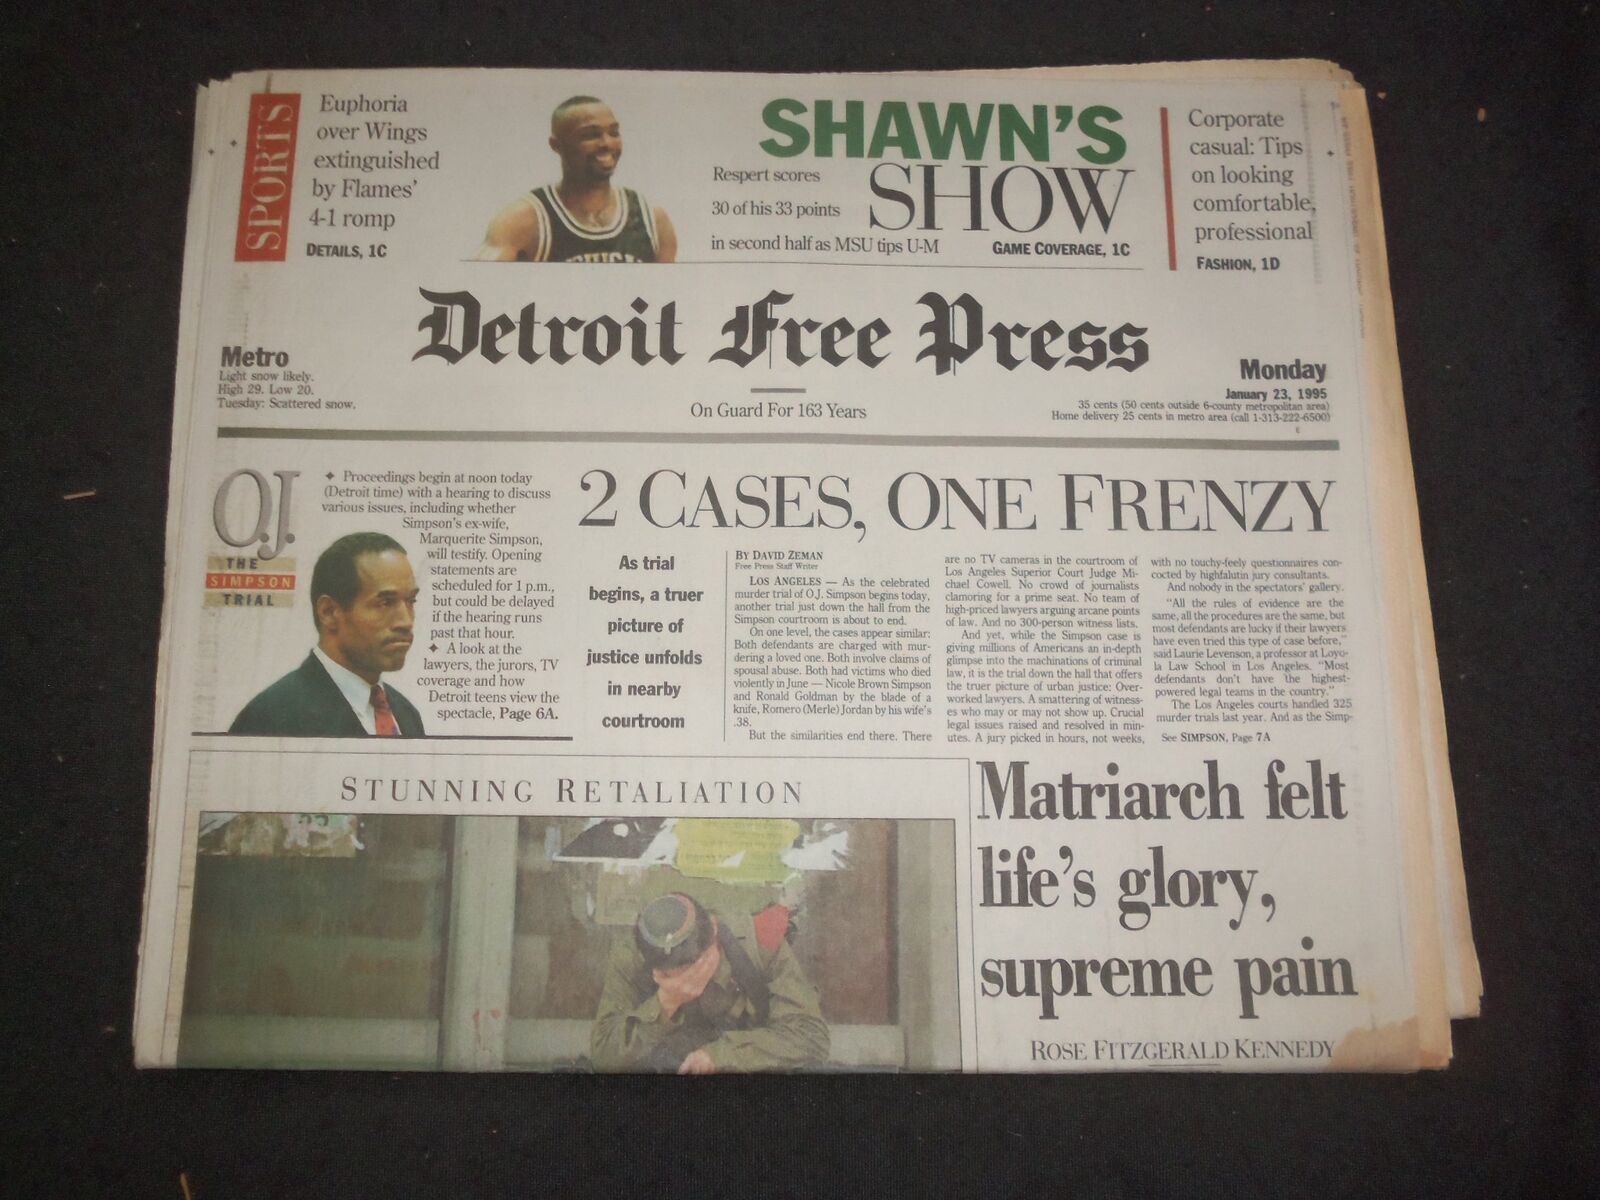 1995 JAN 23 DETROIT FREE PRESS NEWSPAPER - O.J. SIMPSON TRIAL BEGINS - NP 7660